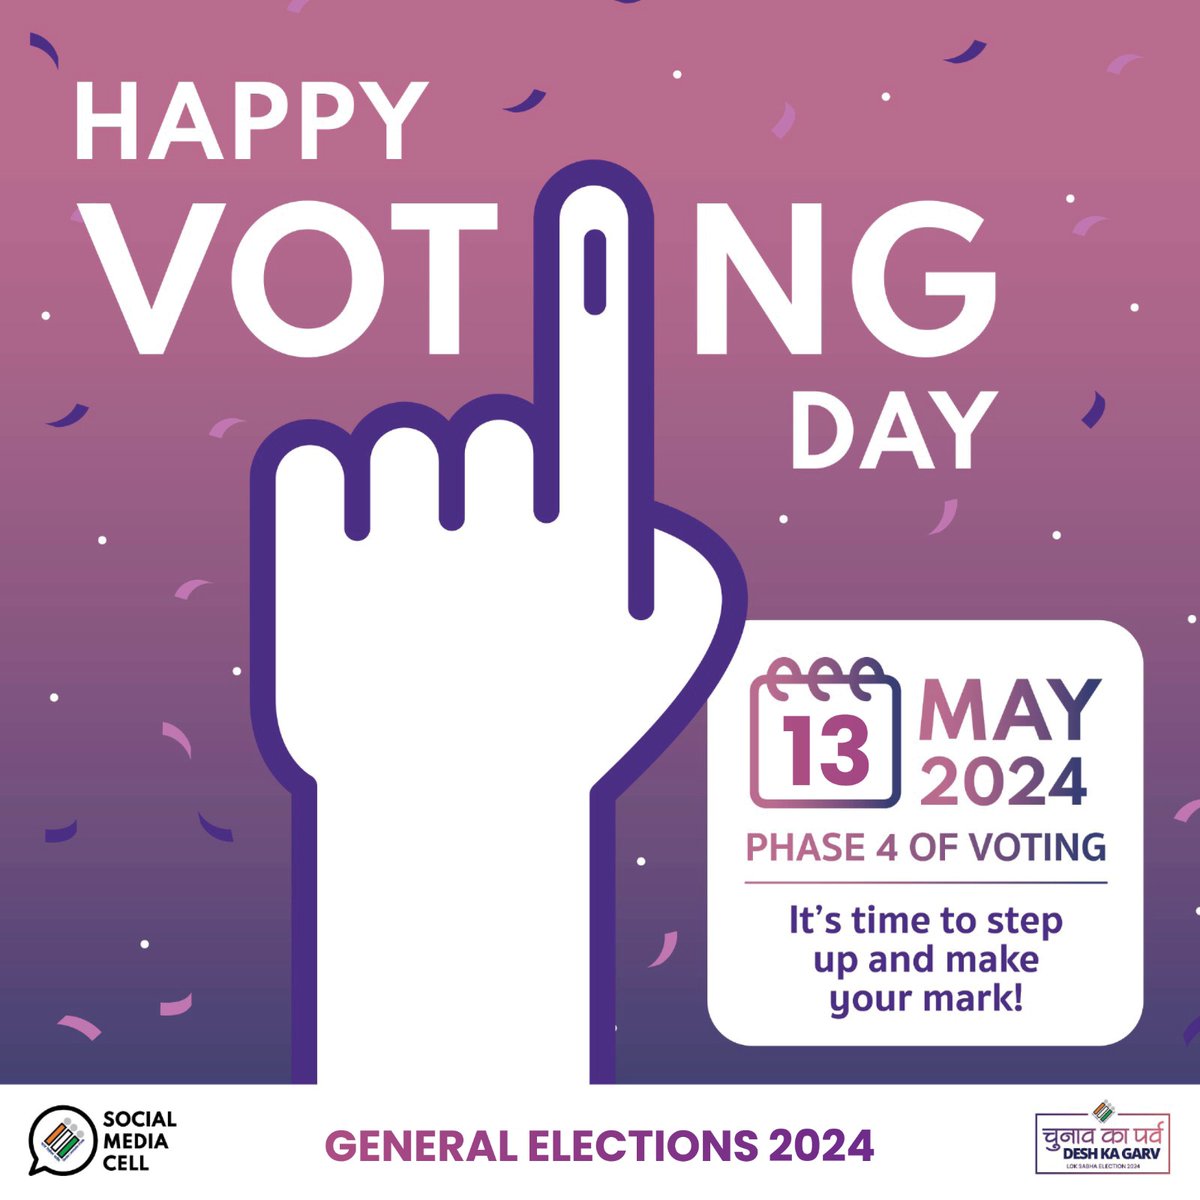 Happy Voting Day!🥳🥳 Let's celebrate #ChunavKaParv by casting our vote! #YouAreTheOne 🫵 #Phase4 #GeneralElections2024 #DeshKaGarv #InkWaliSelfie #LokSabhaElections2024